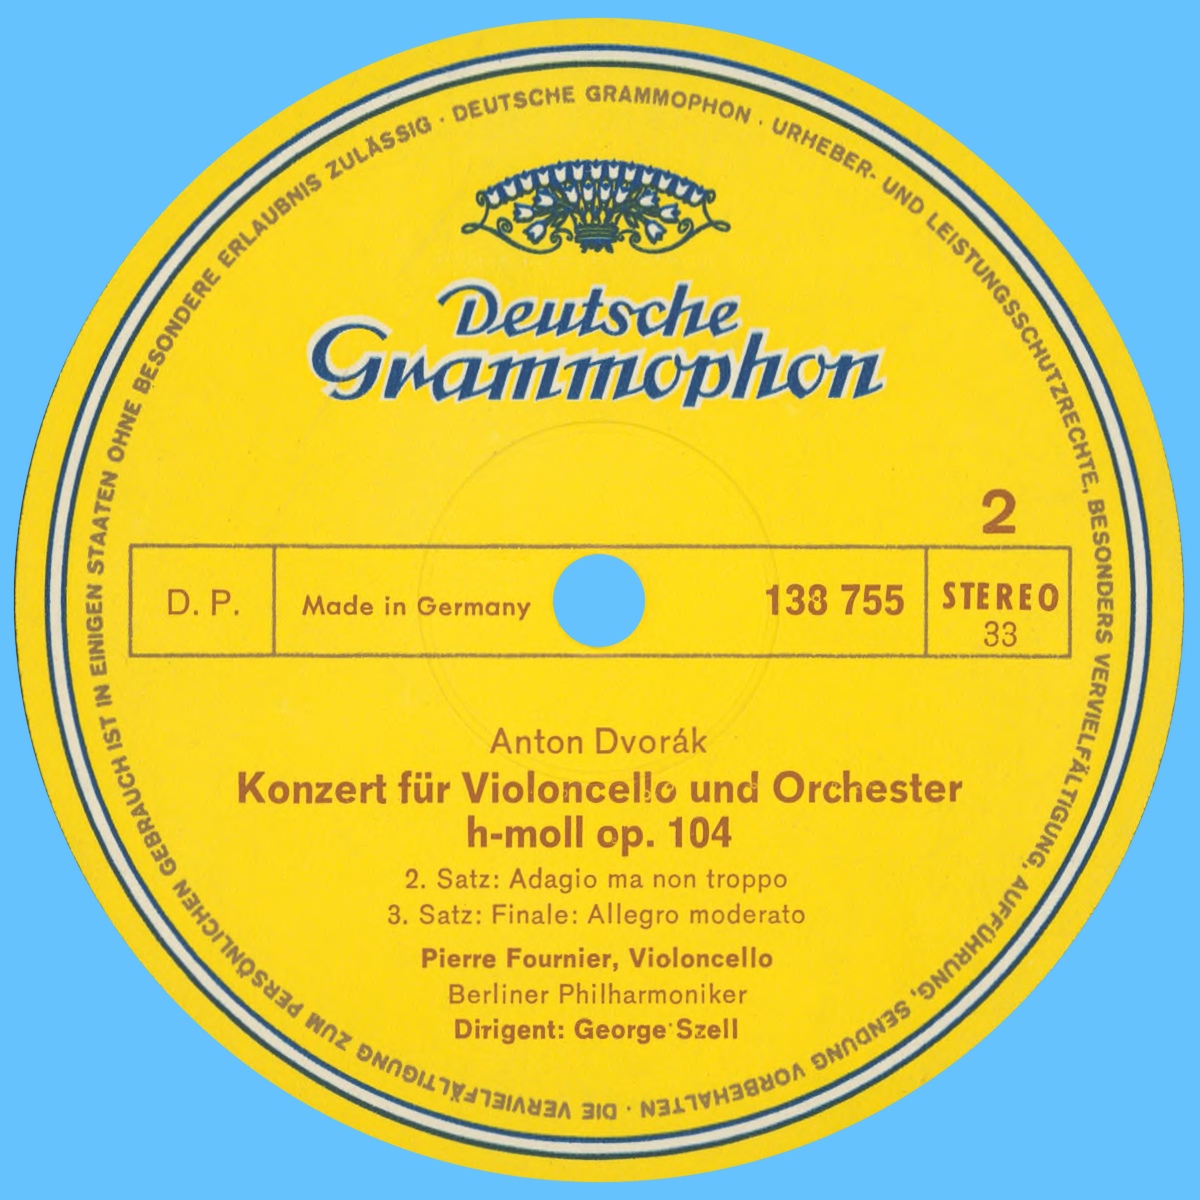 Étiquette verso du disque Deutsche Grammophon SLPM 138 755